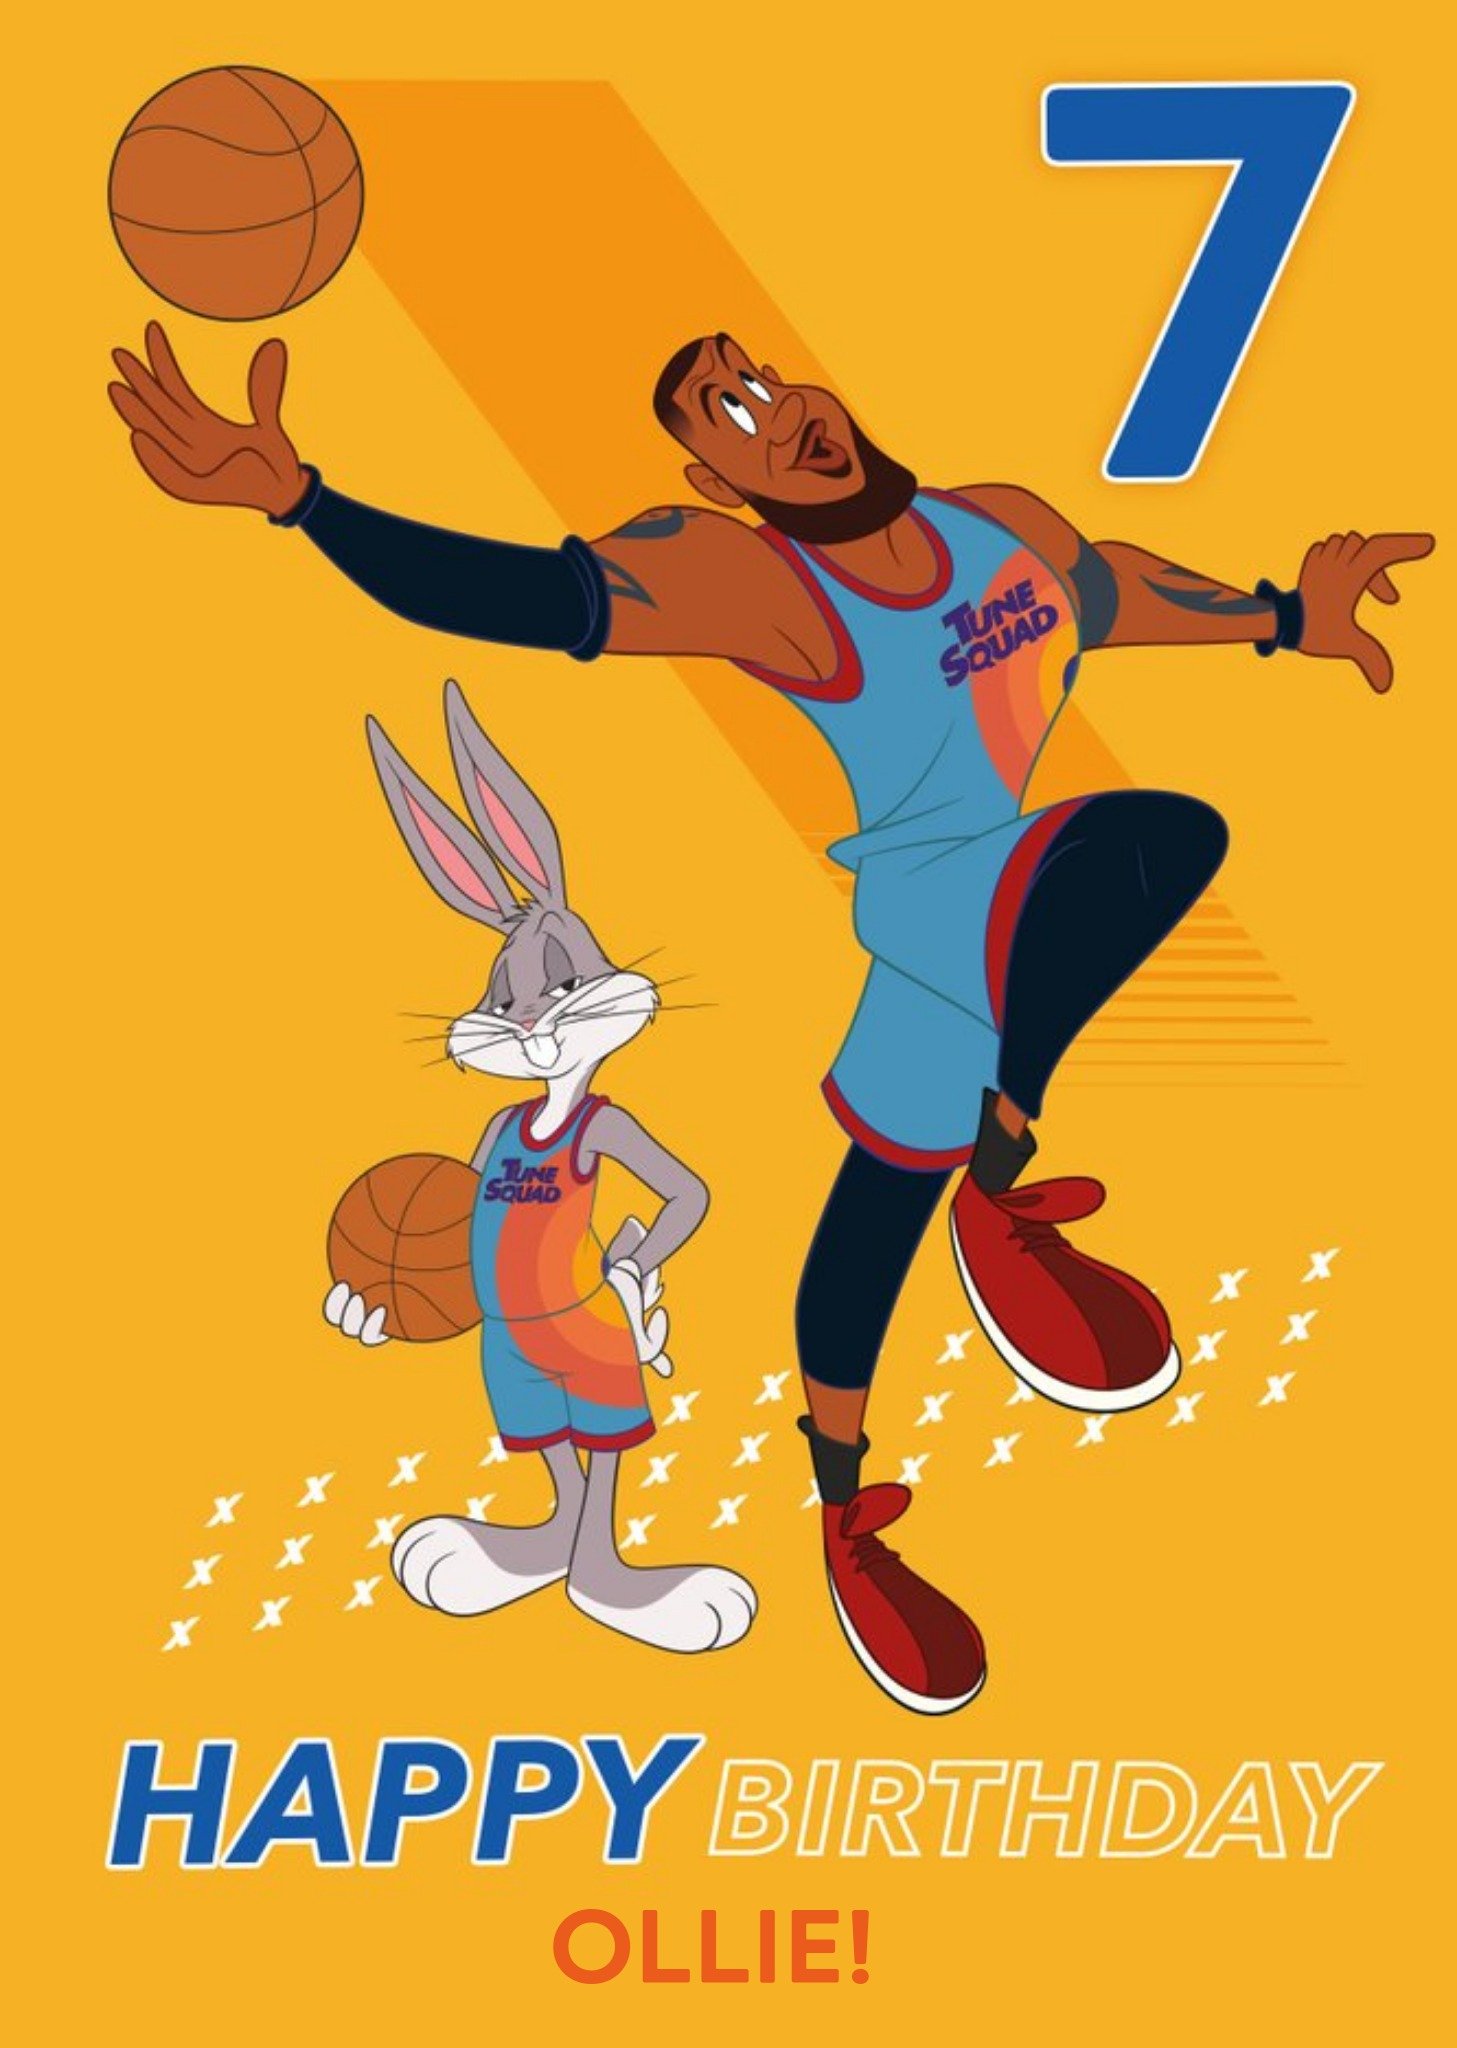 Moonpig Space Jam 2 Lebron James And Bugs Bunny 7th Birthday Card Ecard